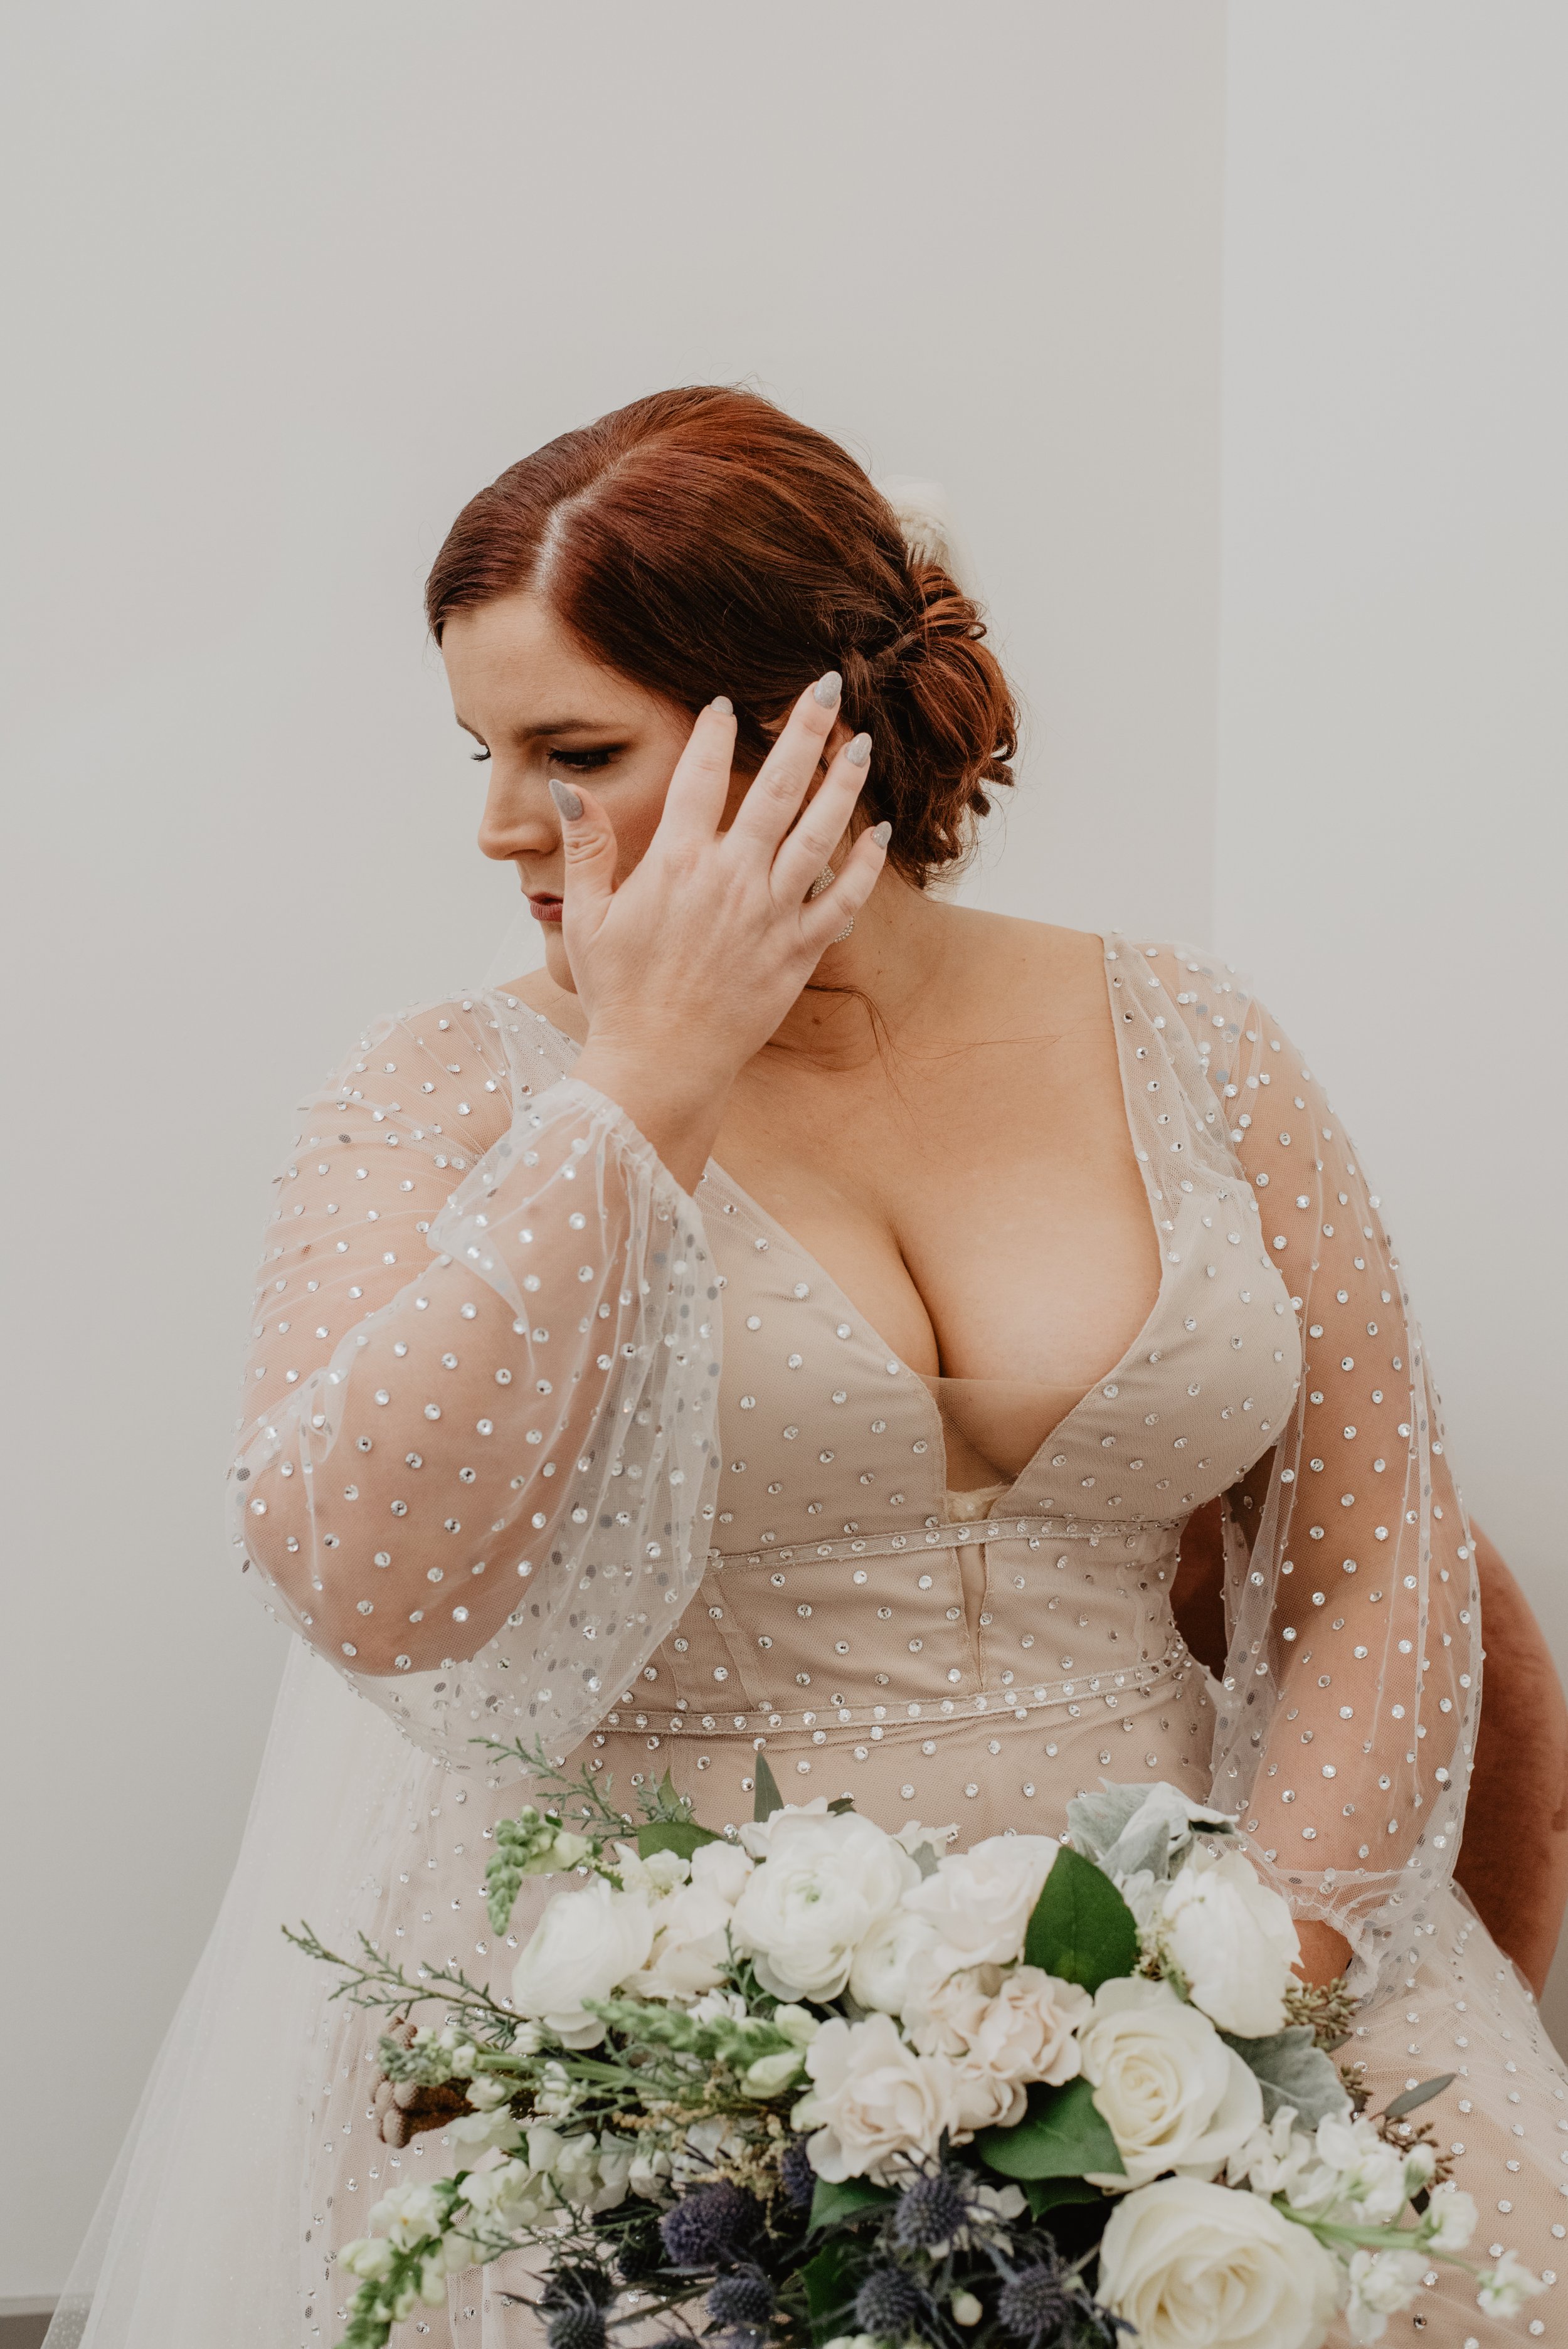  Dallas bridal photography 